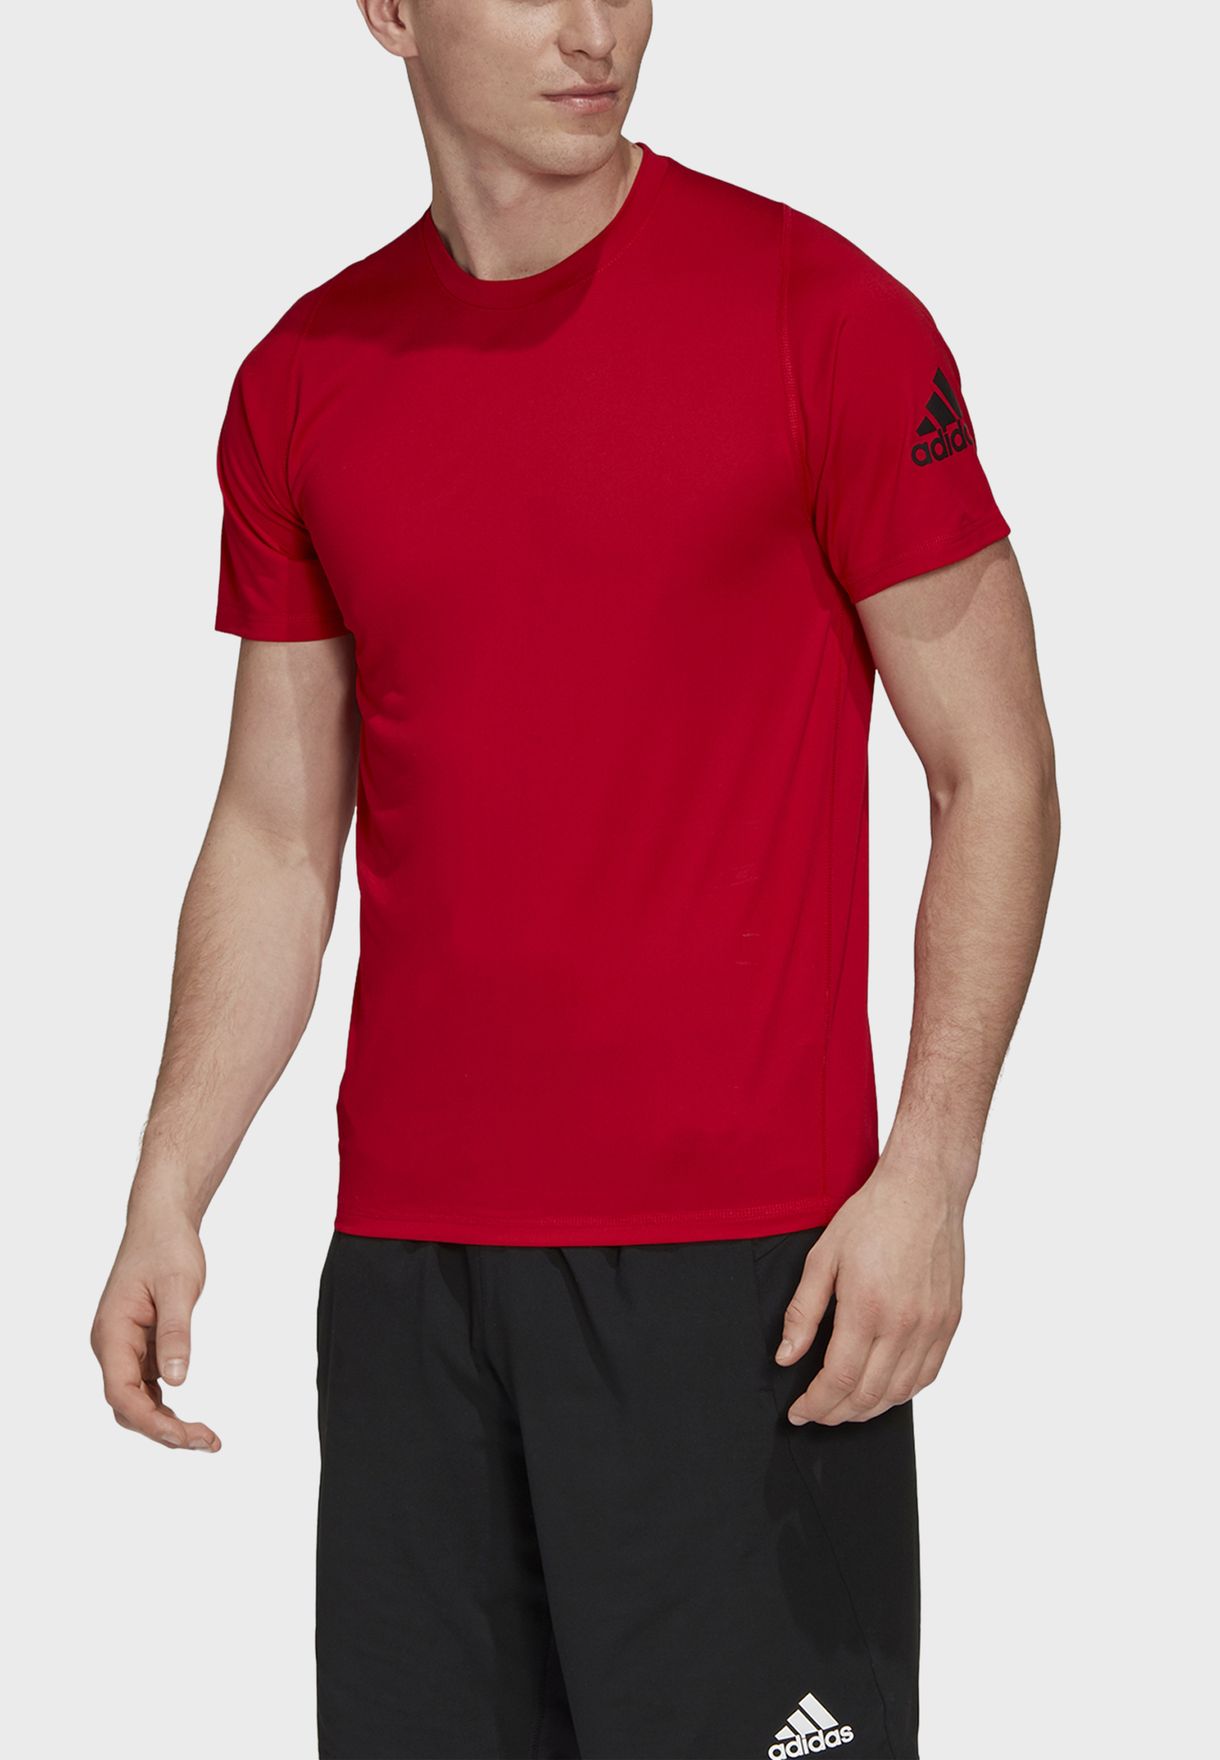 FreeLift Sport Ultimate T-Shirt